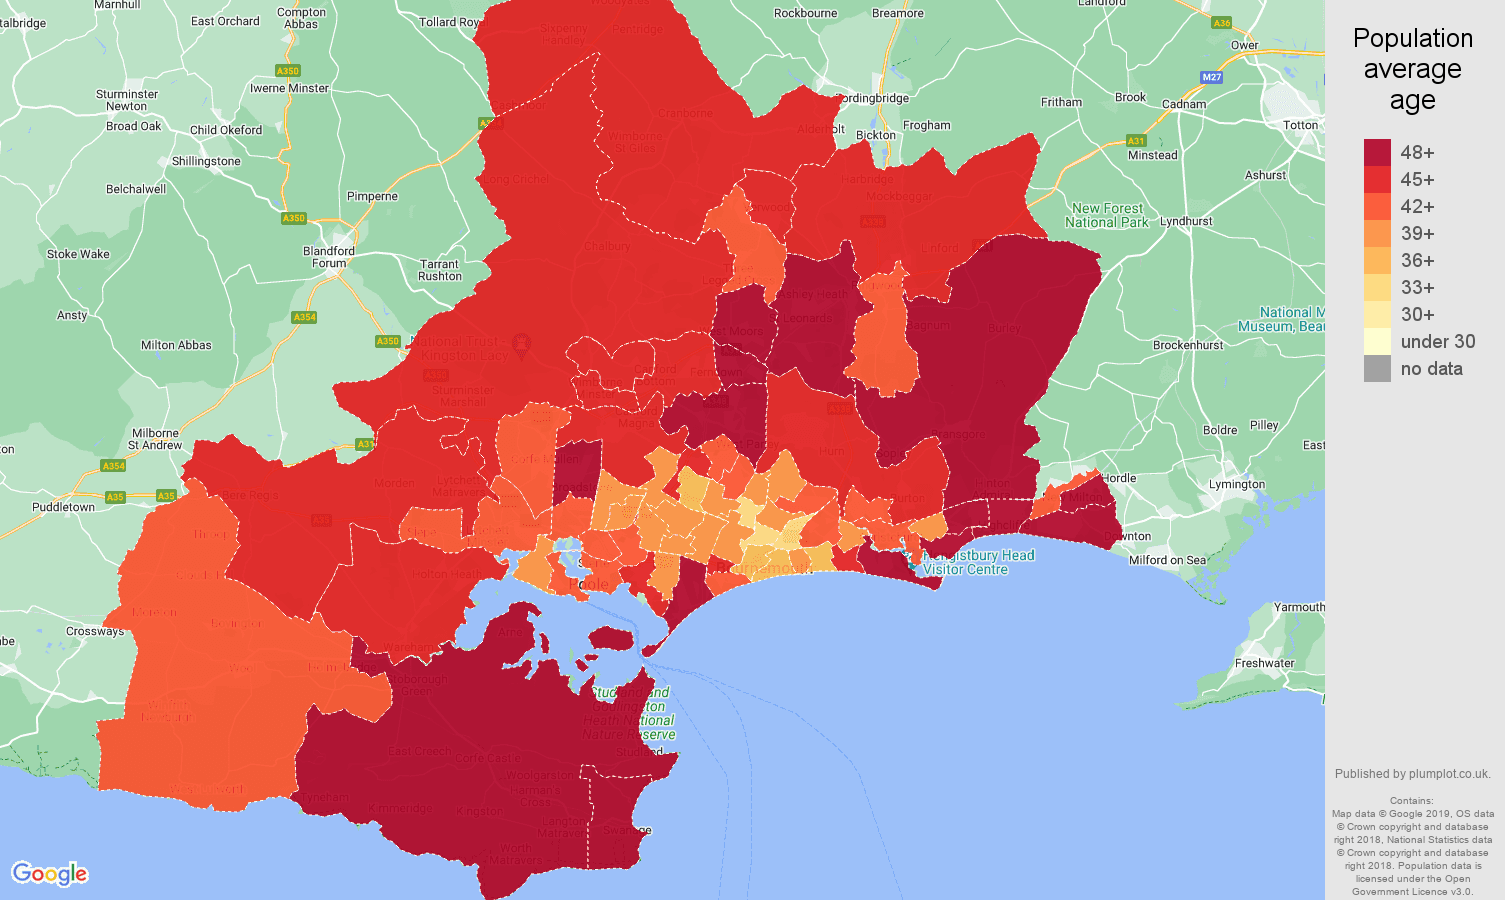 Bournemouth population average age map